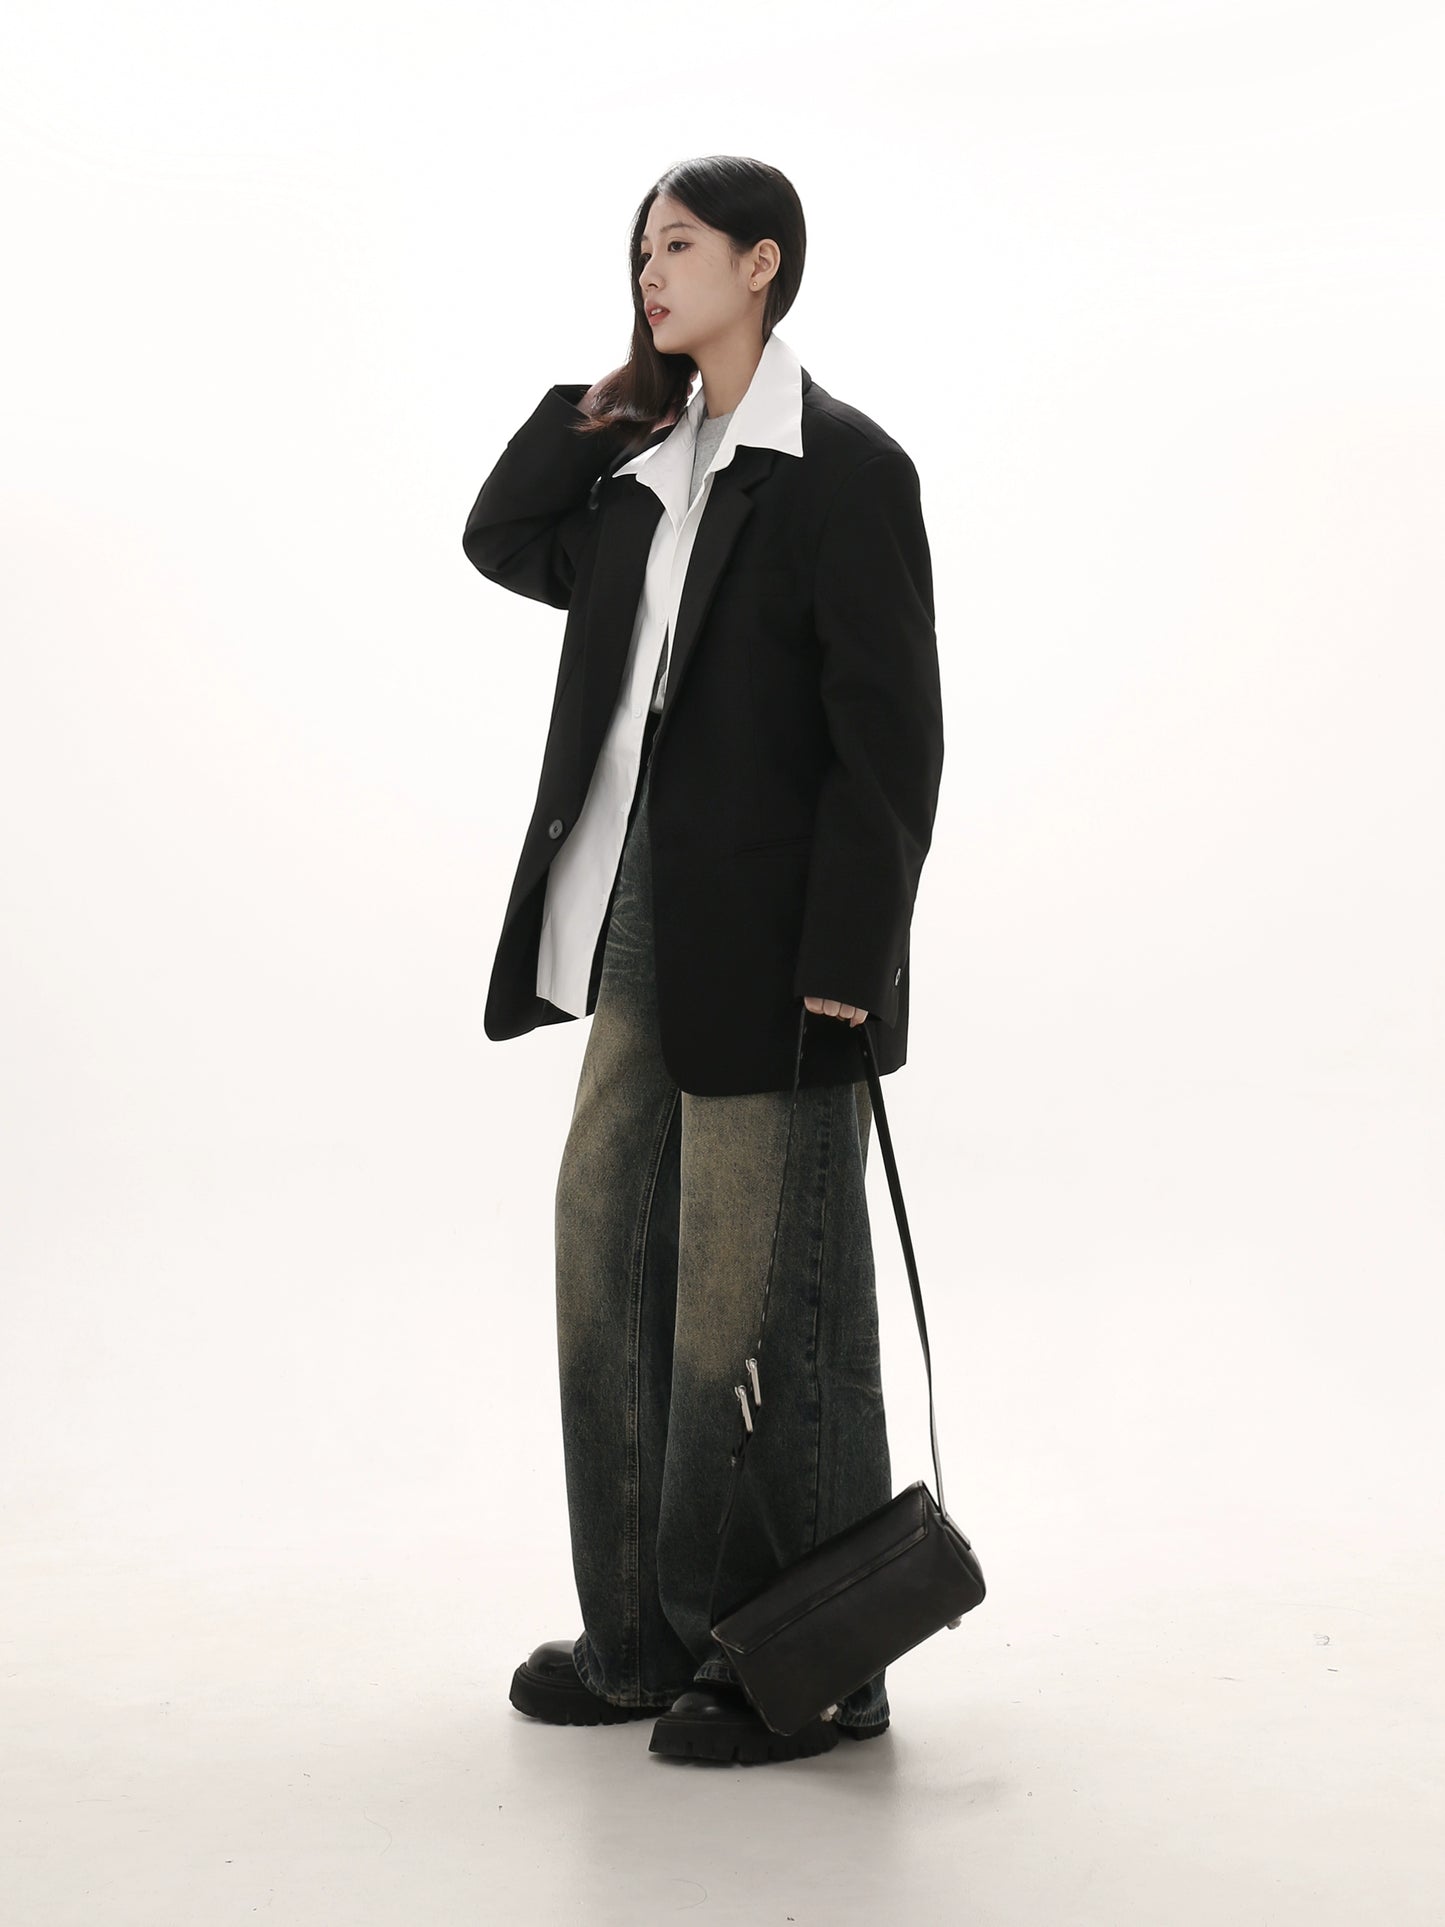 GIBBYCNA fake two-piece patchwork blazer men's spring Korean version loose casual design sense niche suit